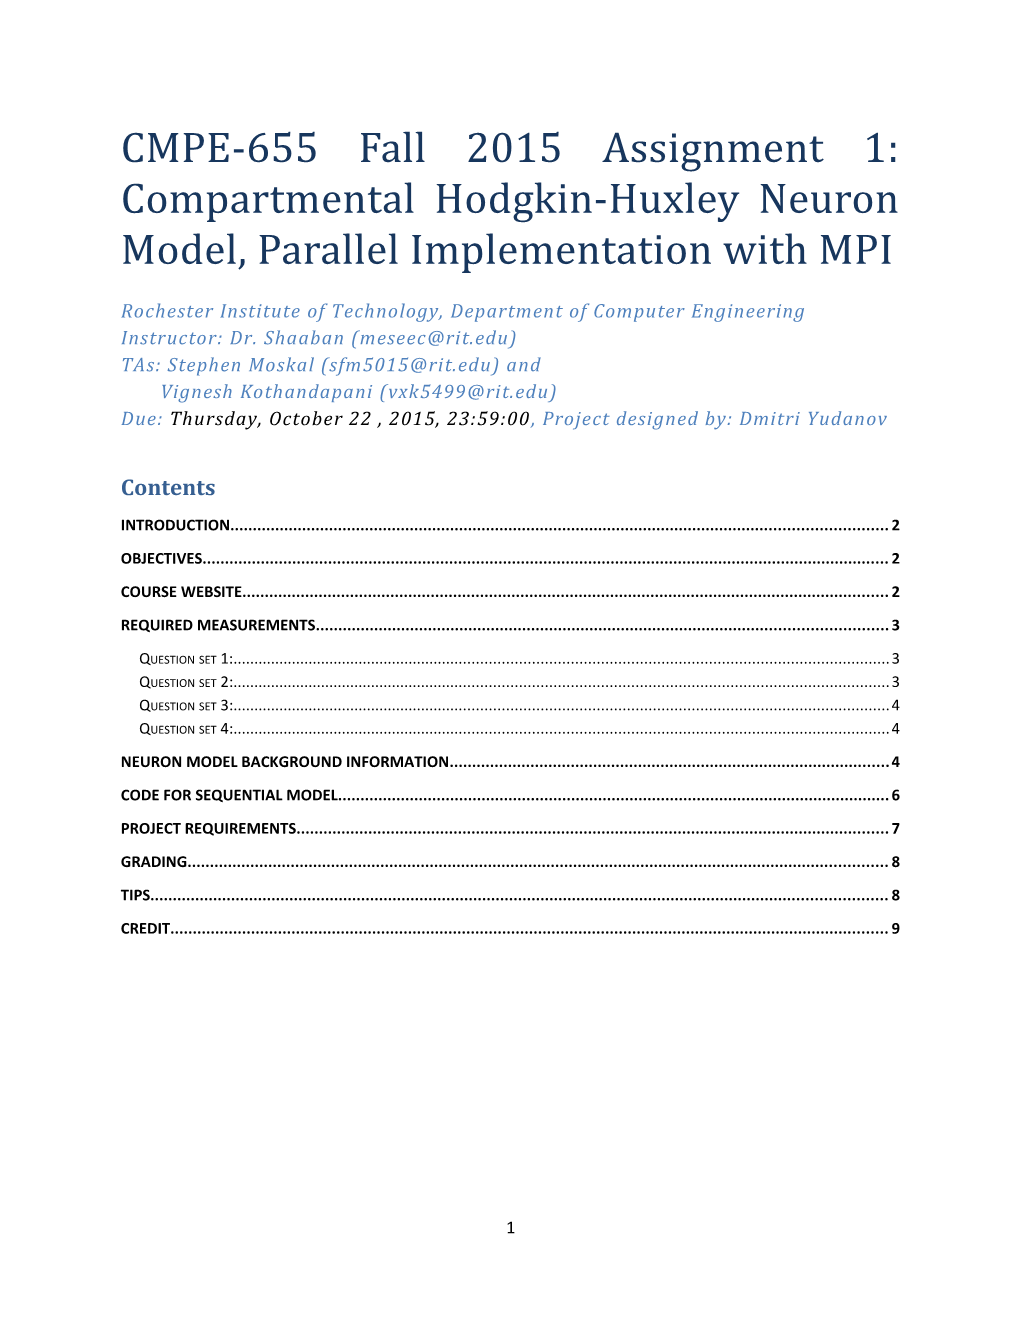 CMPE-655 Fall 2015Assignment 1: Compartmental Hodgkin-Huxley Neuron Model, Parallel